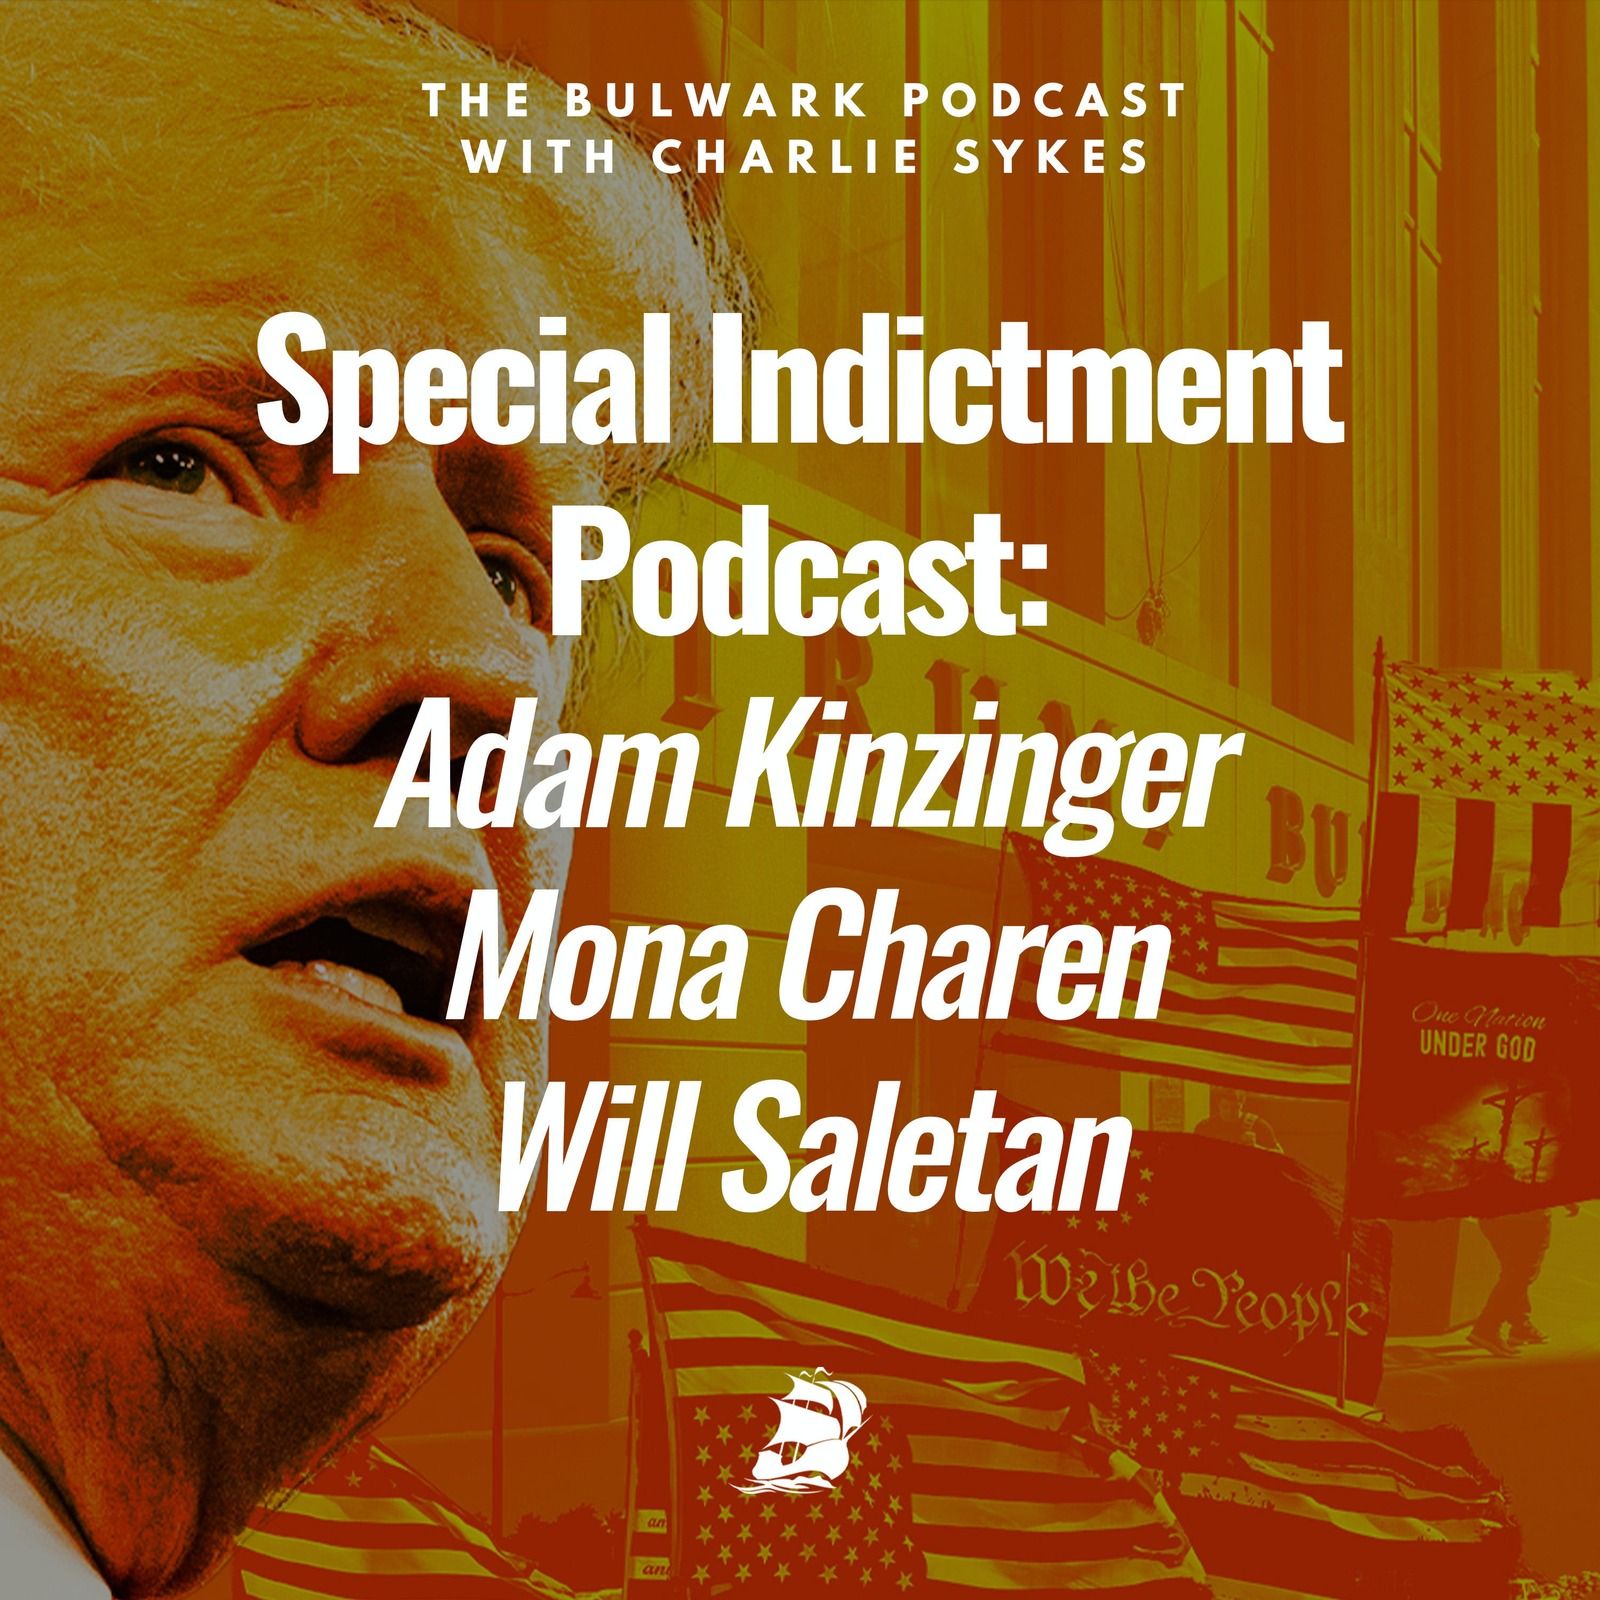 Special Indictment Podcast: Adam Kinzinger, Mona Charen, Will Saletan by The Bulwark Podcast